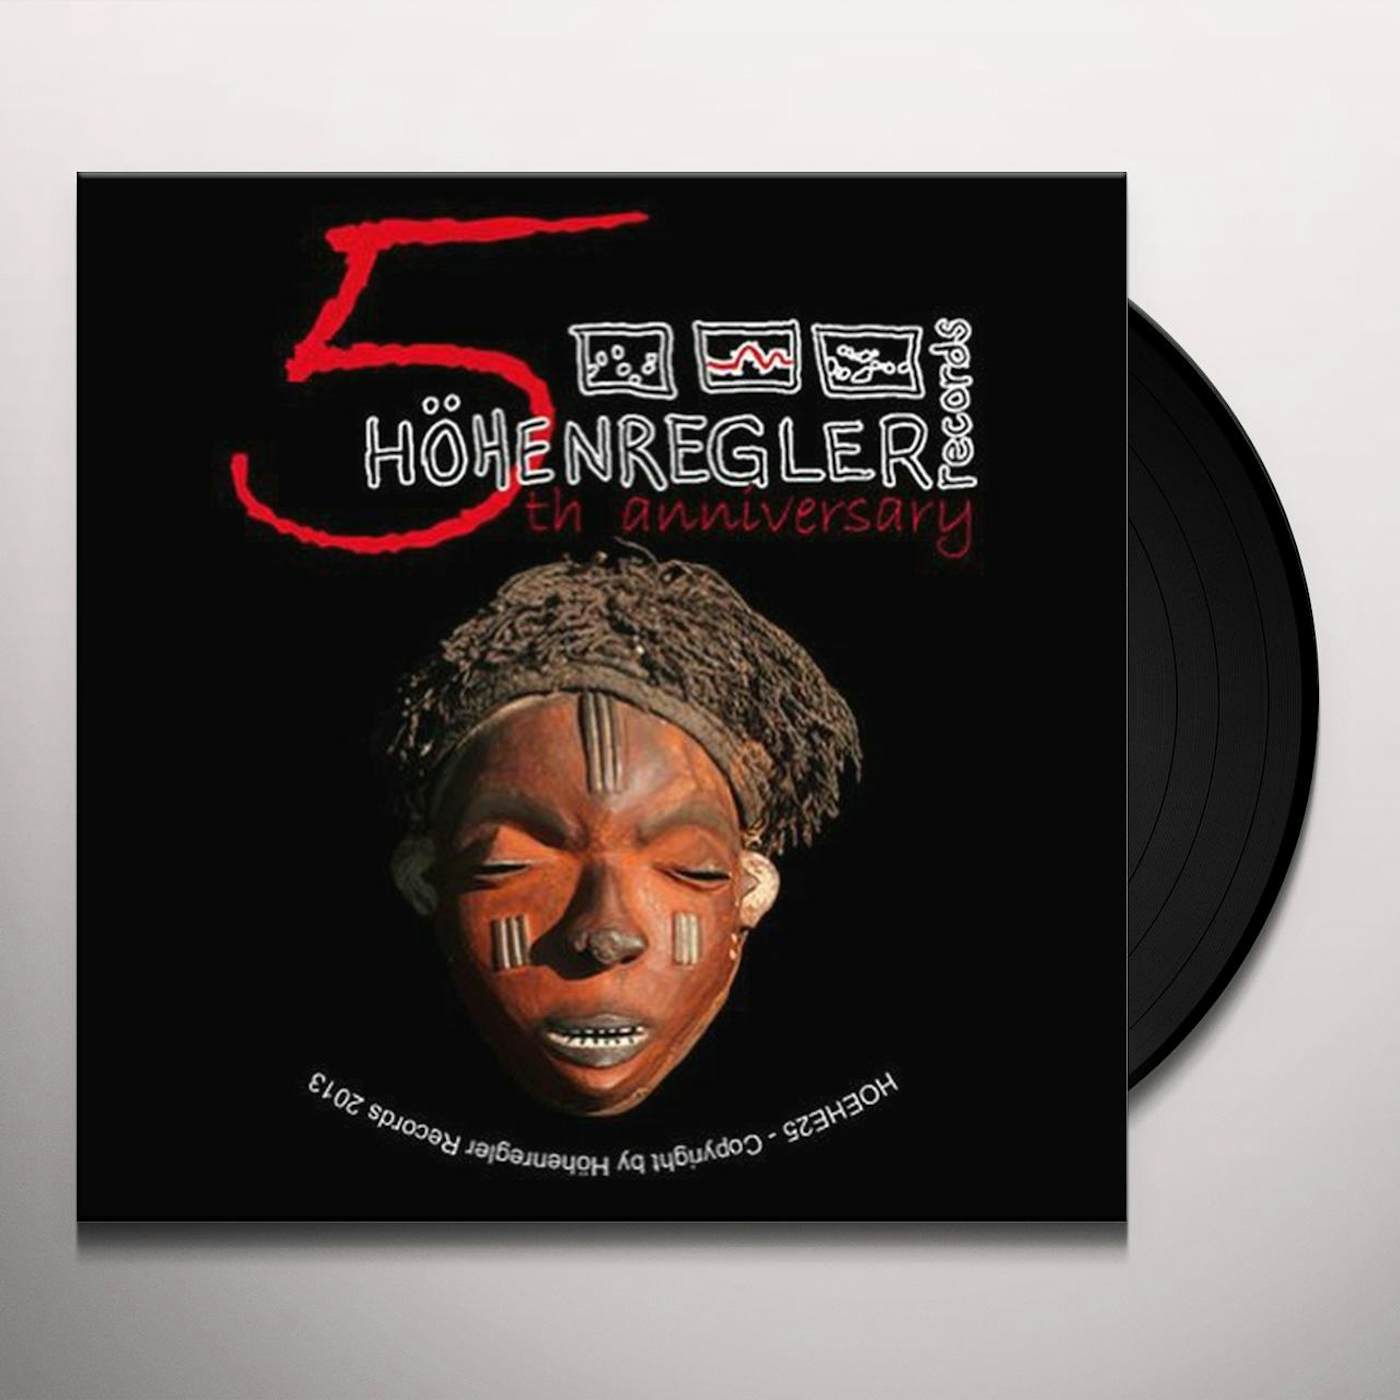 5 YEARS HOHENREGLER / VARIOUS Vinyl Record